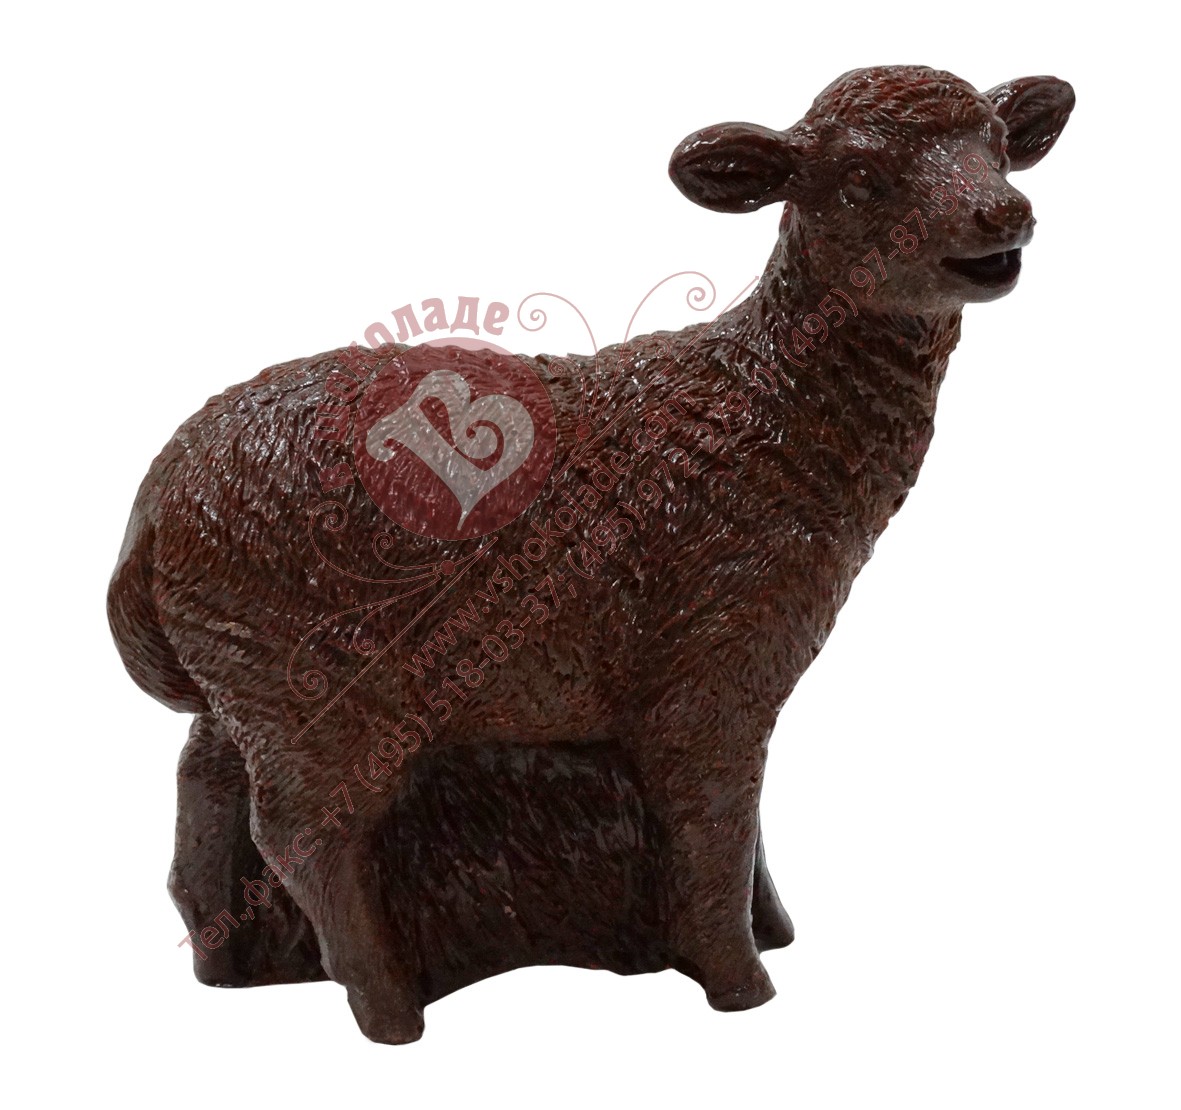 Шоколадная овечка - символ 2015 года. Артикул 2015 ovs_006